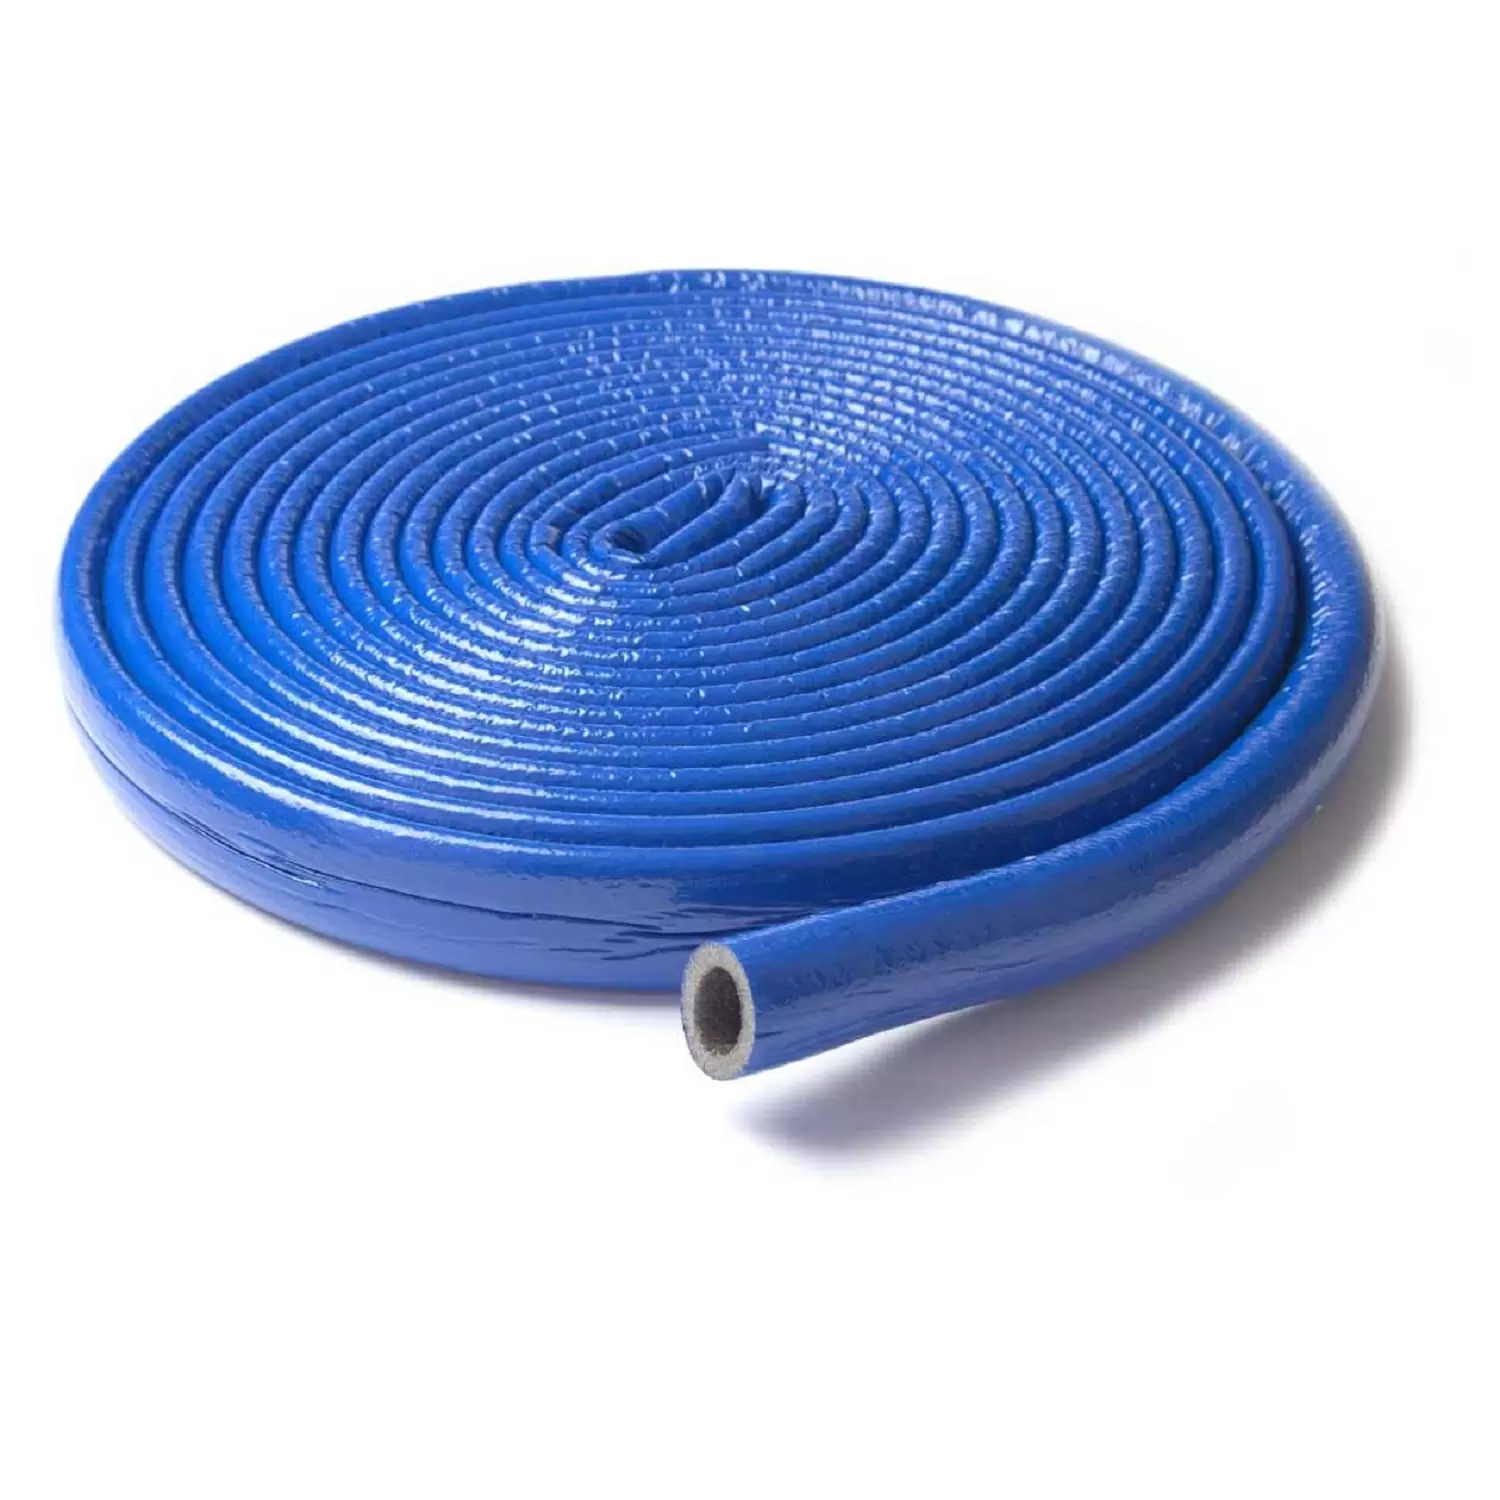 Теплоизоляция Энергофлекс супер протект 18/4 для труб диаметром 16 мм синяя, бухта 11 м